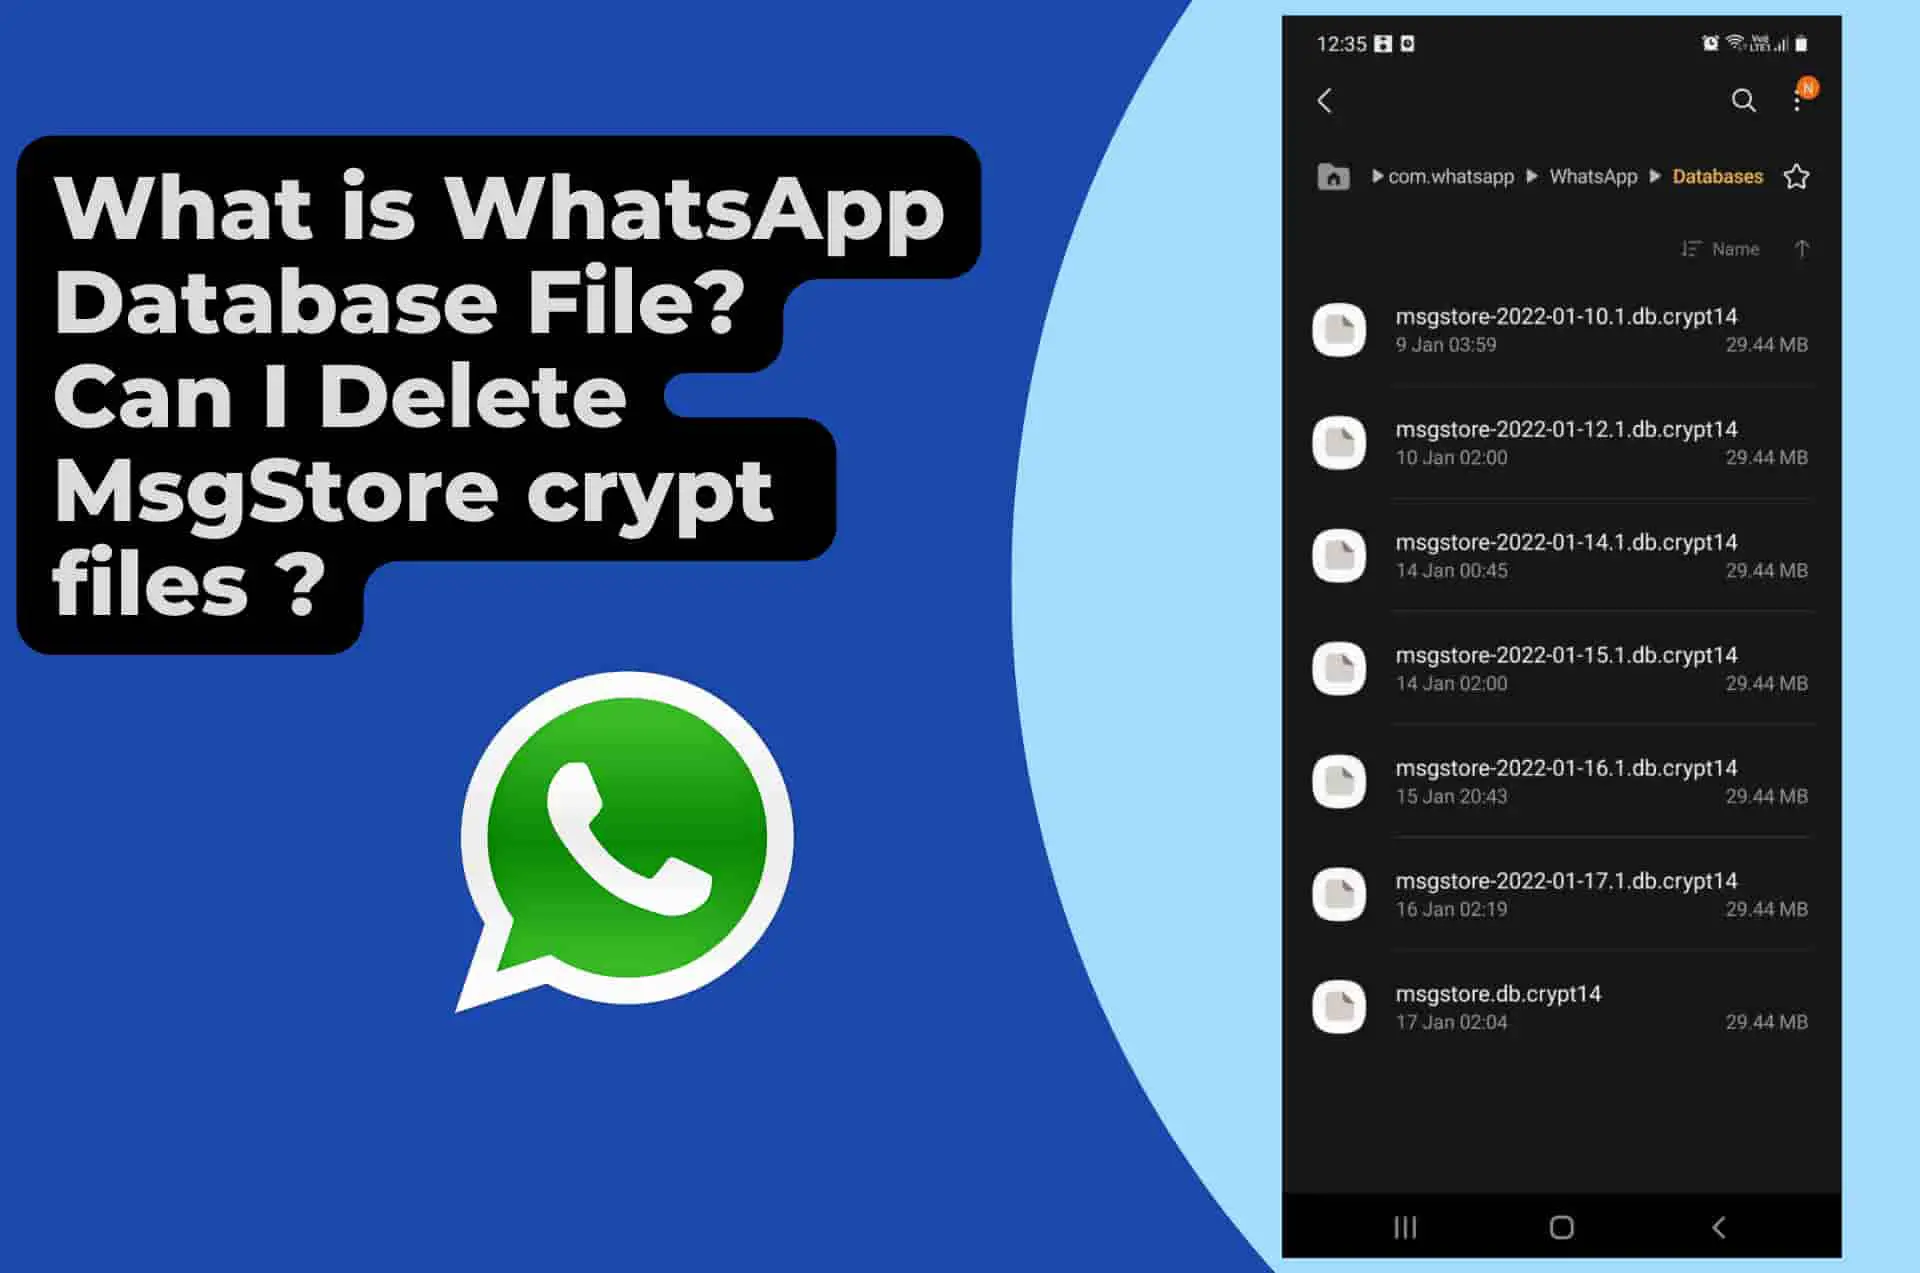 whatsapp-database-folder-can-delete-msgstore-crypt-files